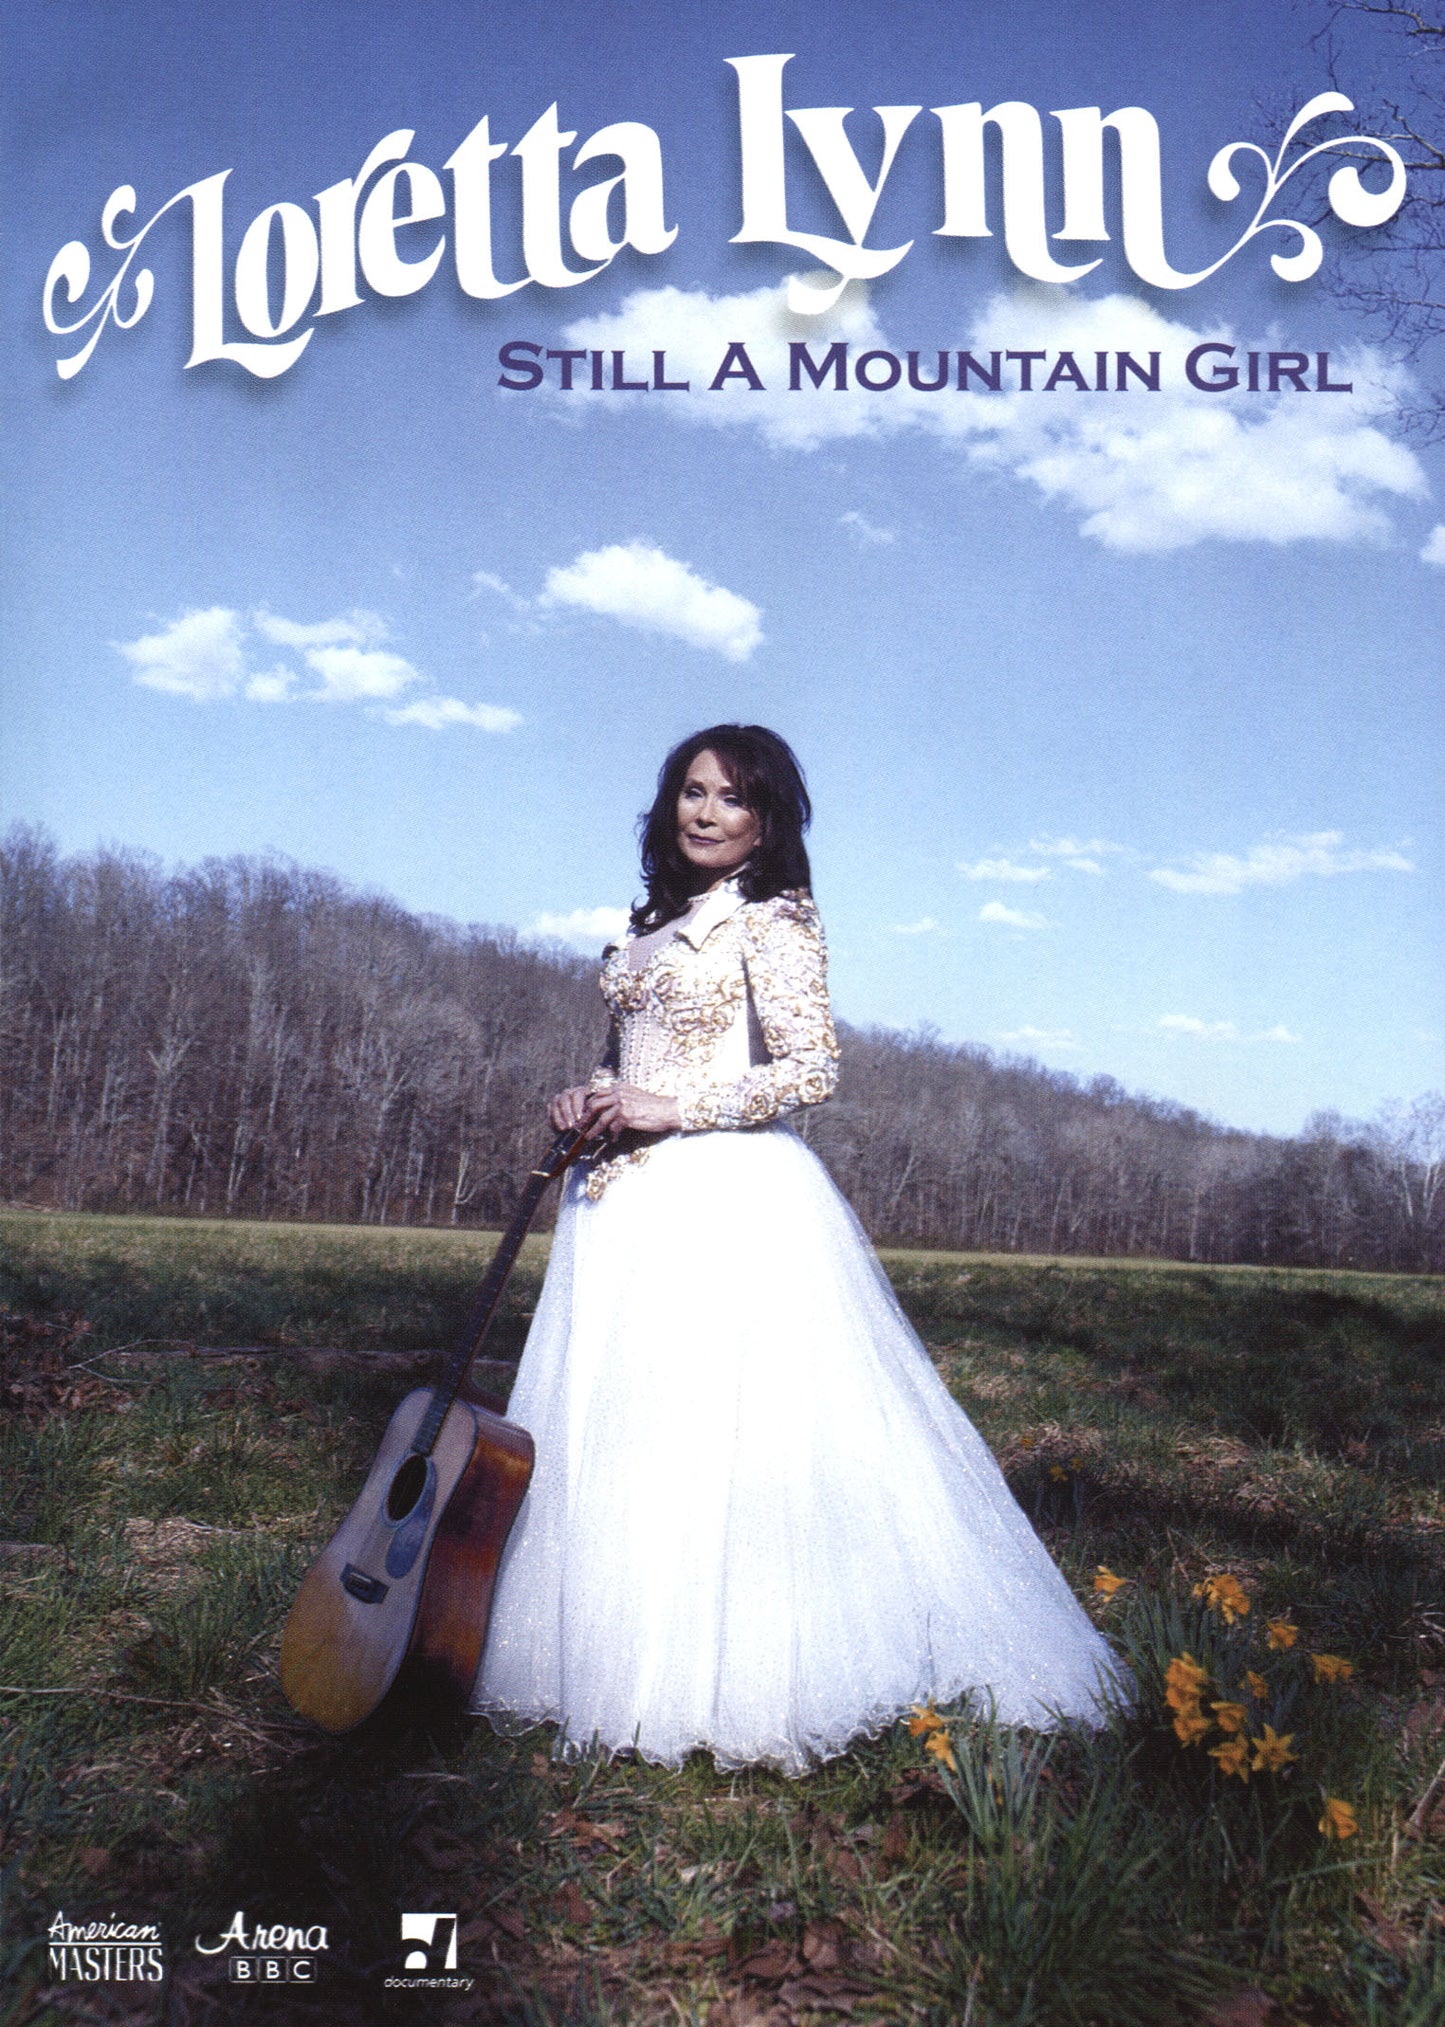 Loretta Lynn: Still a Mountain Girl [Video] cover art